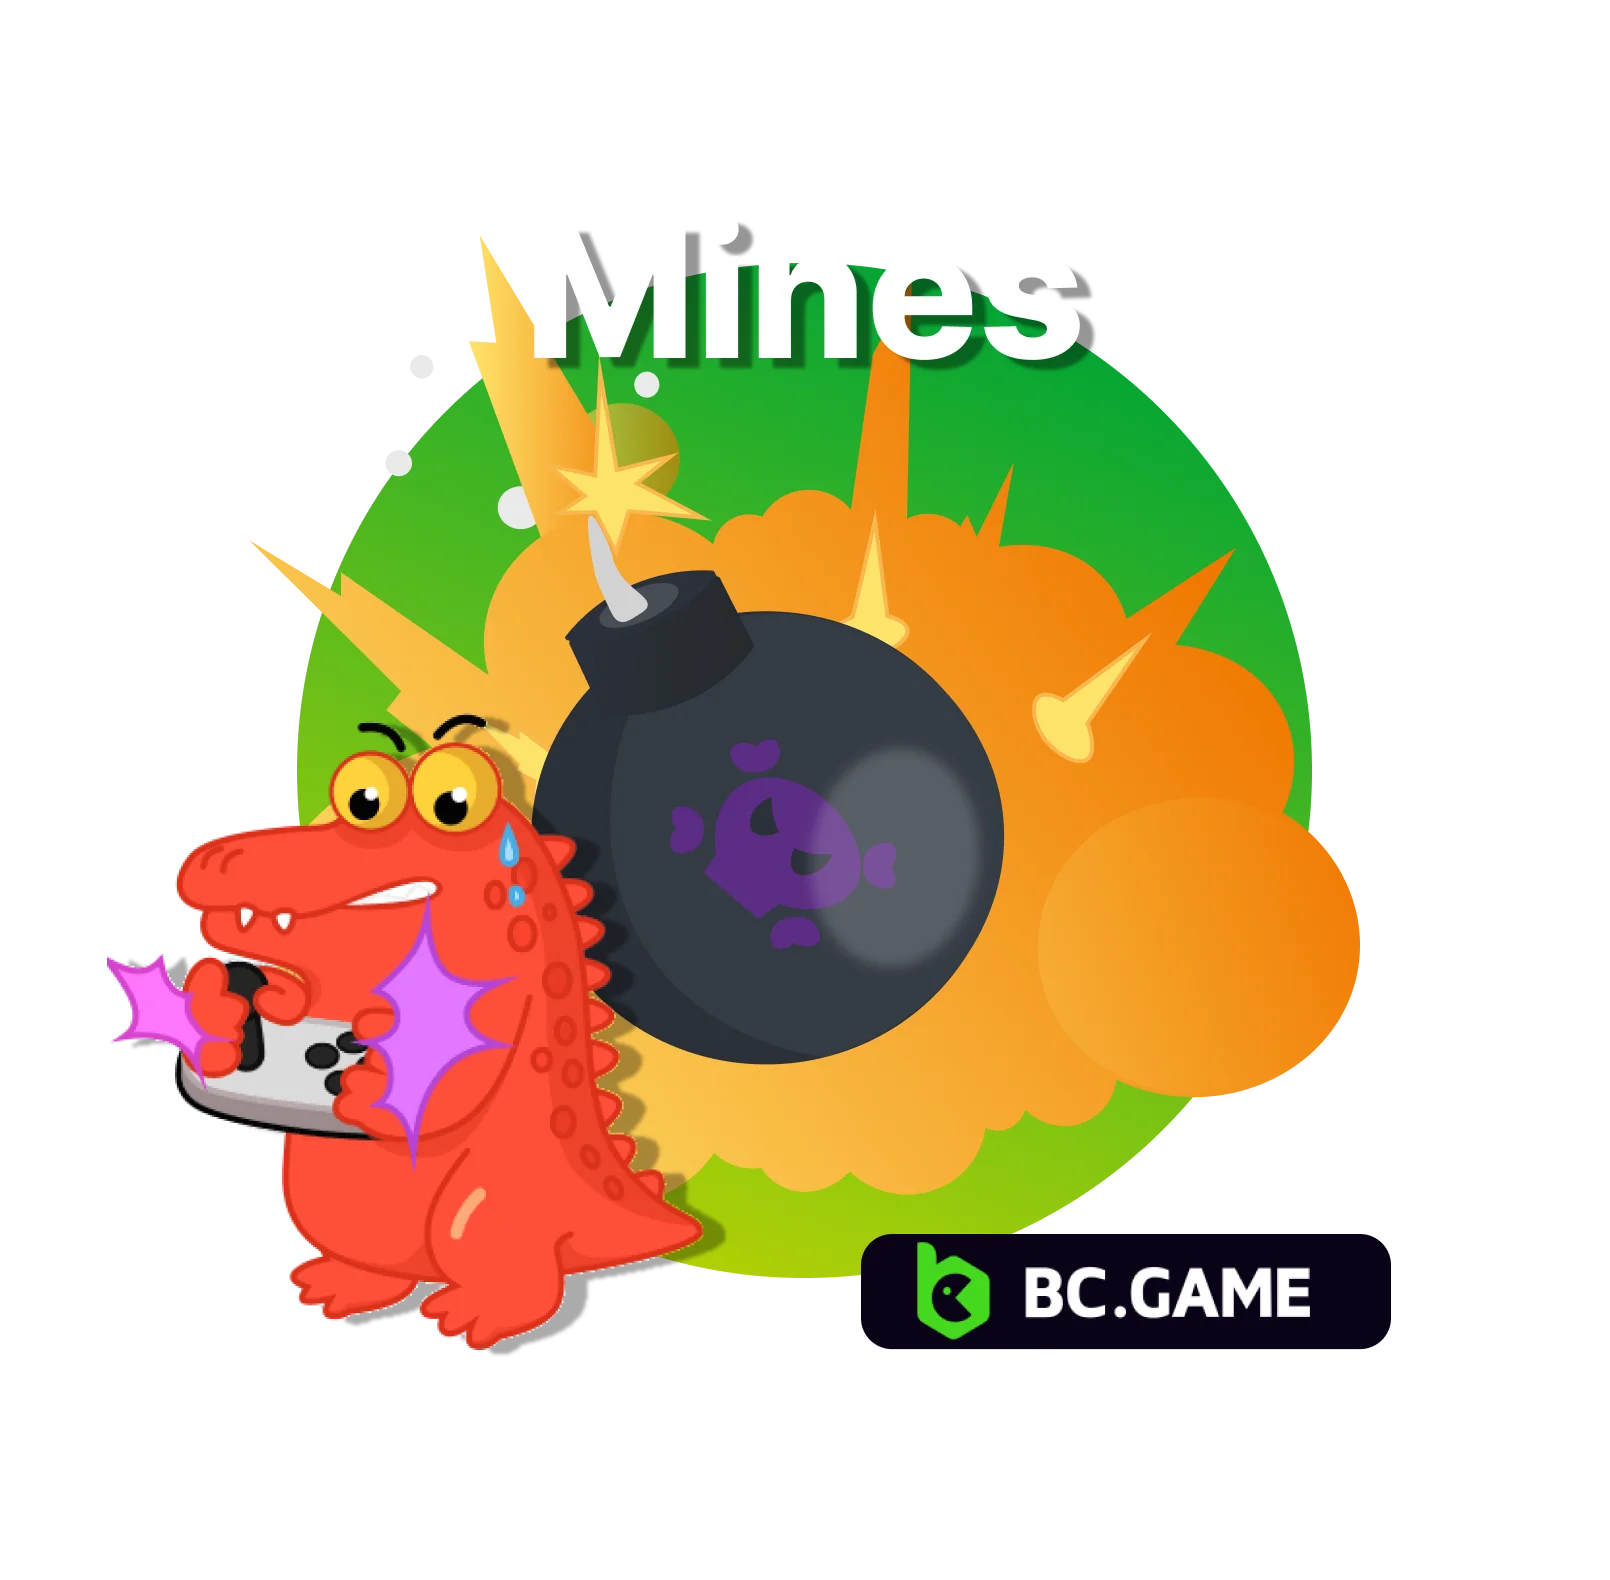 Explore BC.Game exclusive Mines game.